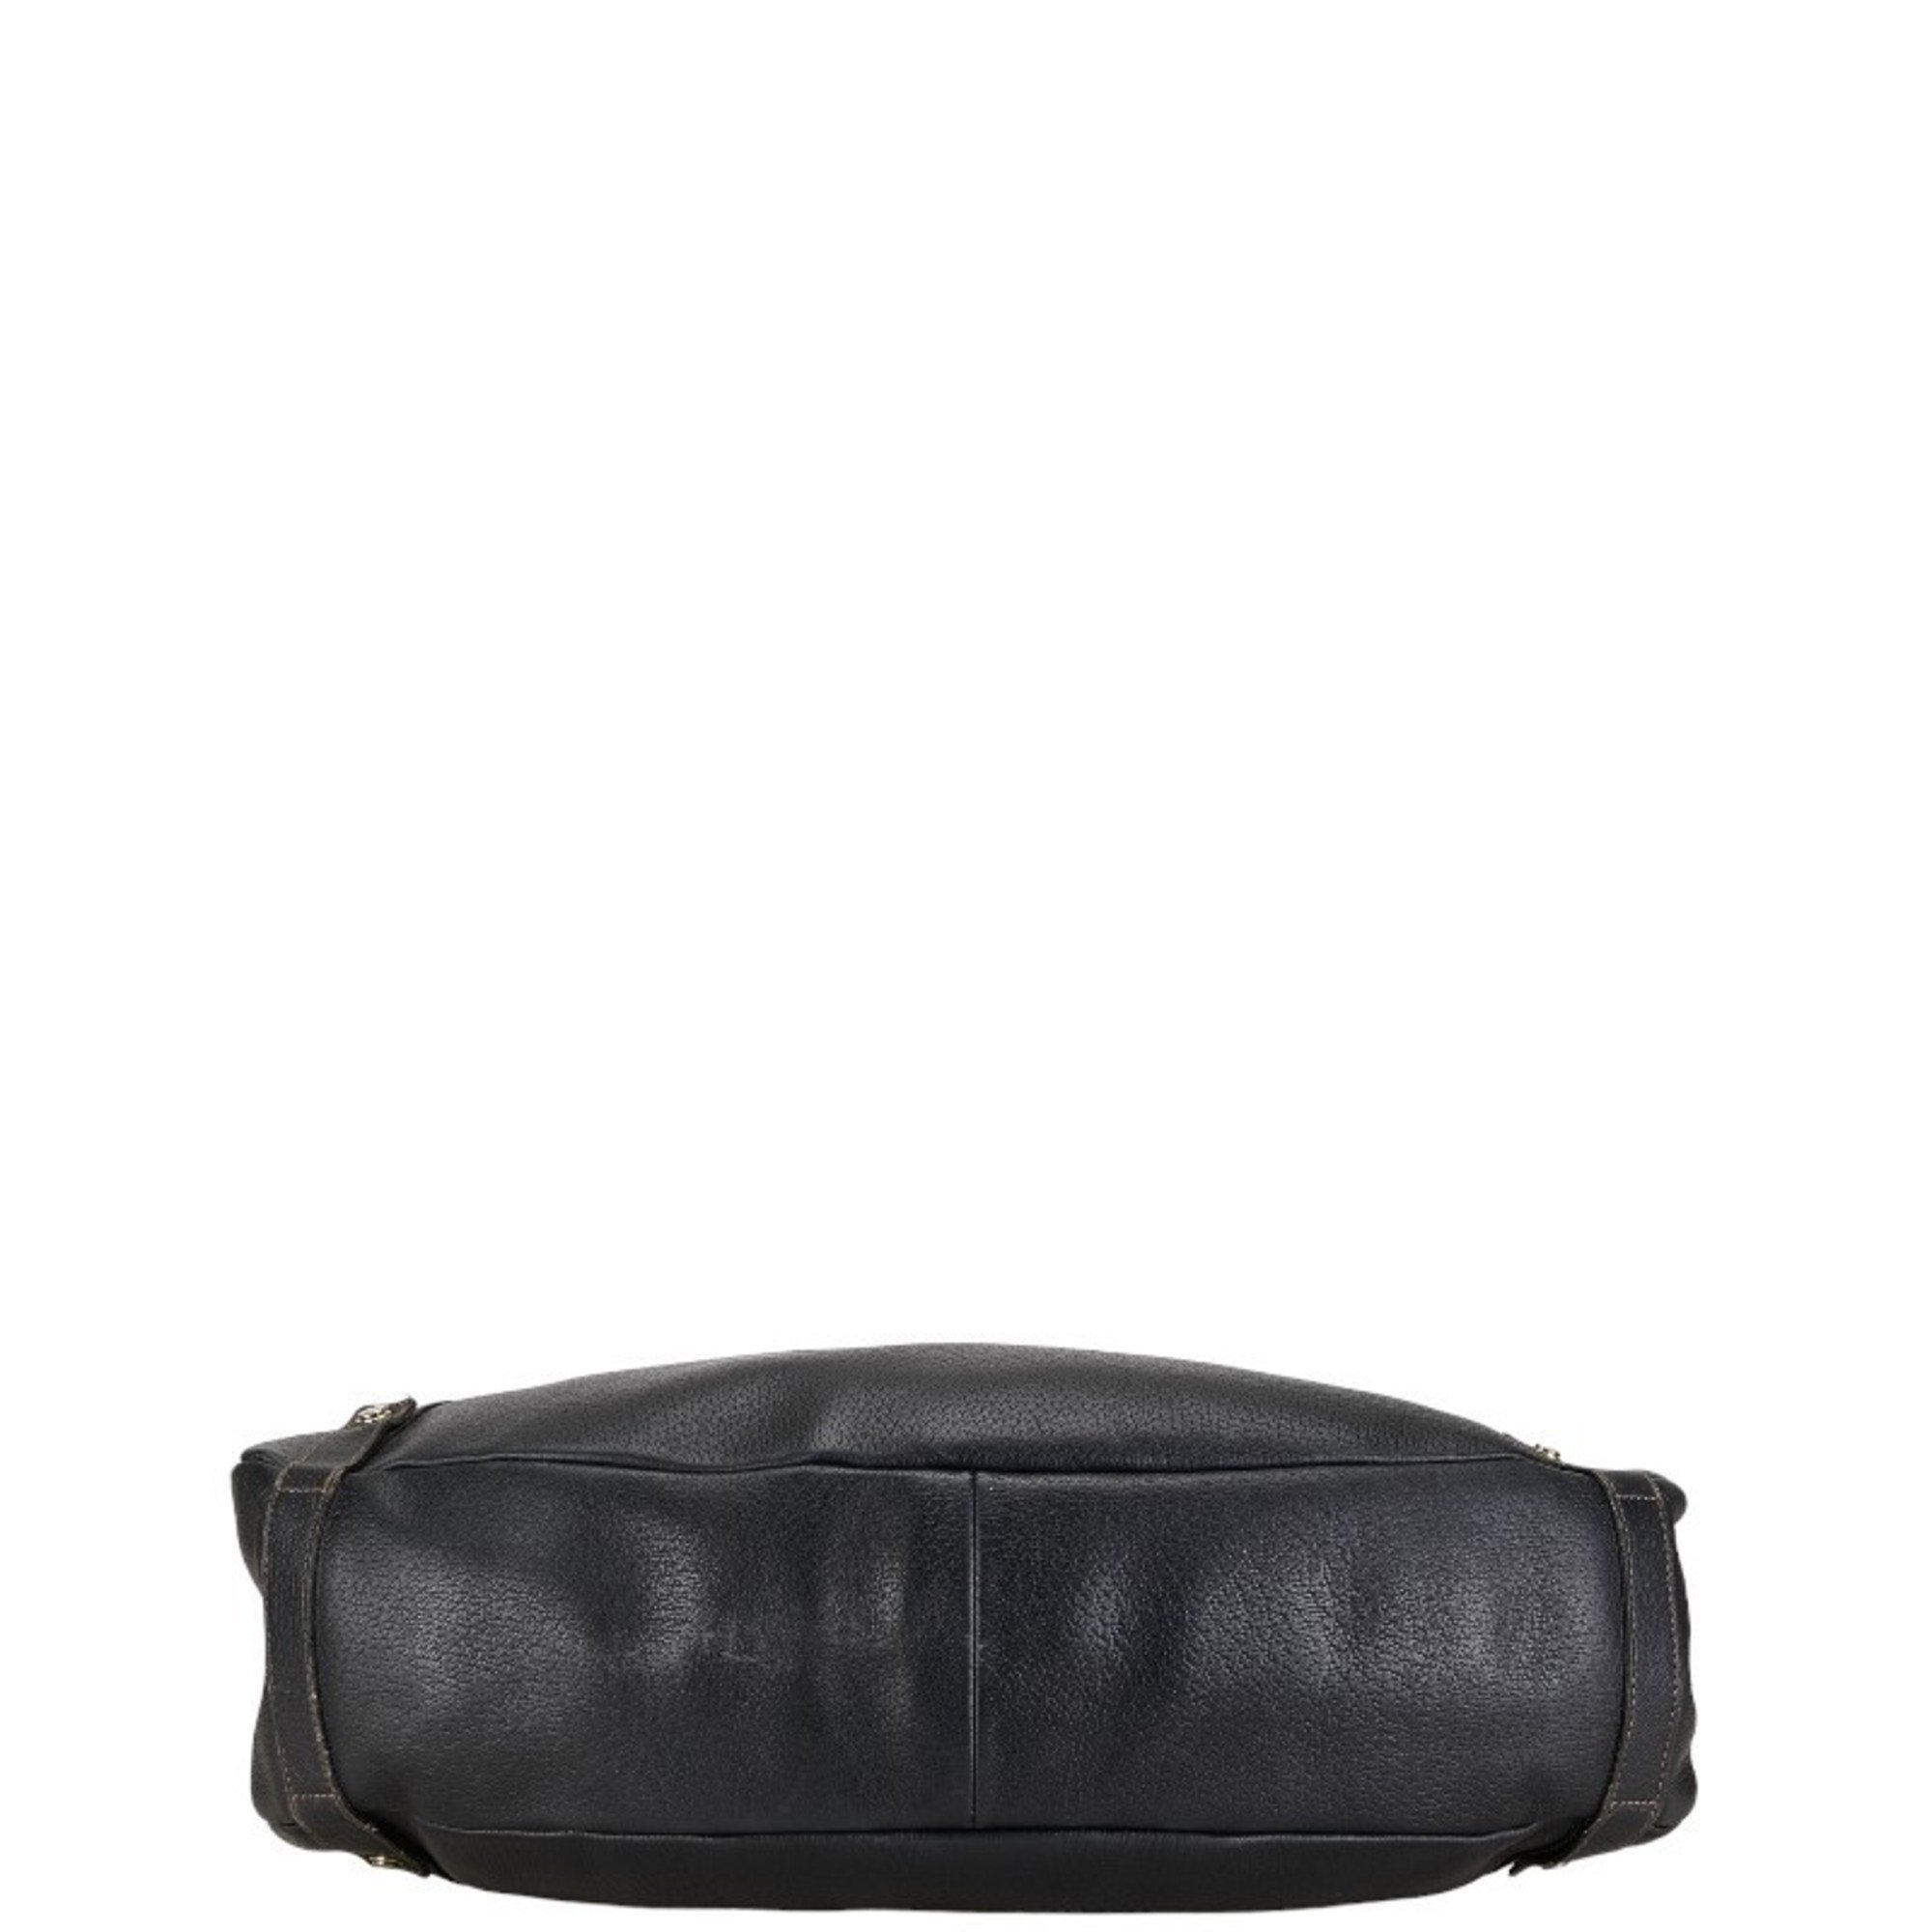 Gucci Abby Handbag Tote Bag 130736 Black Leather Women's GUCCI